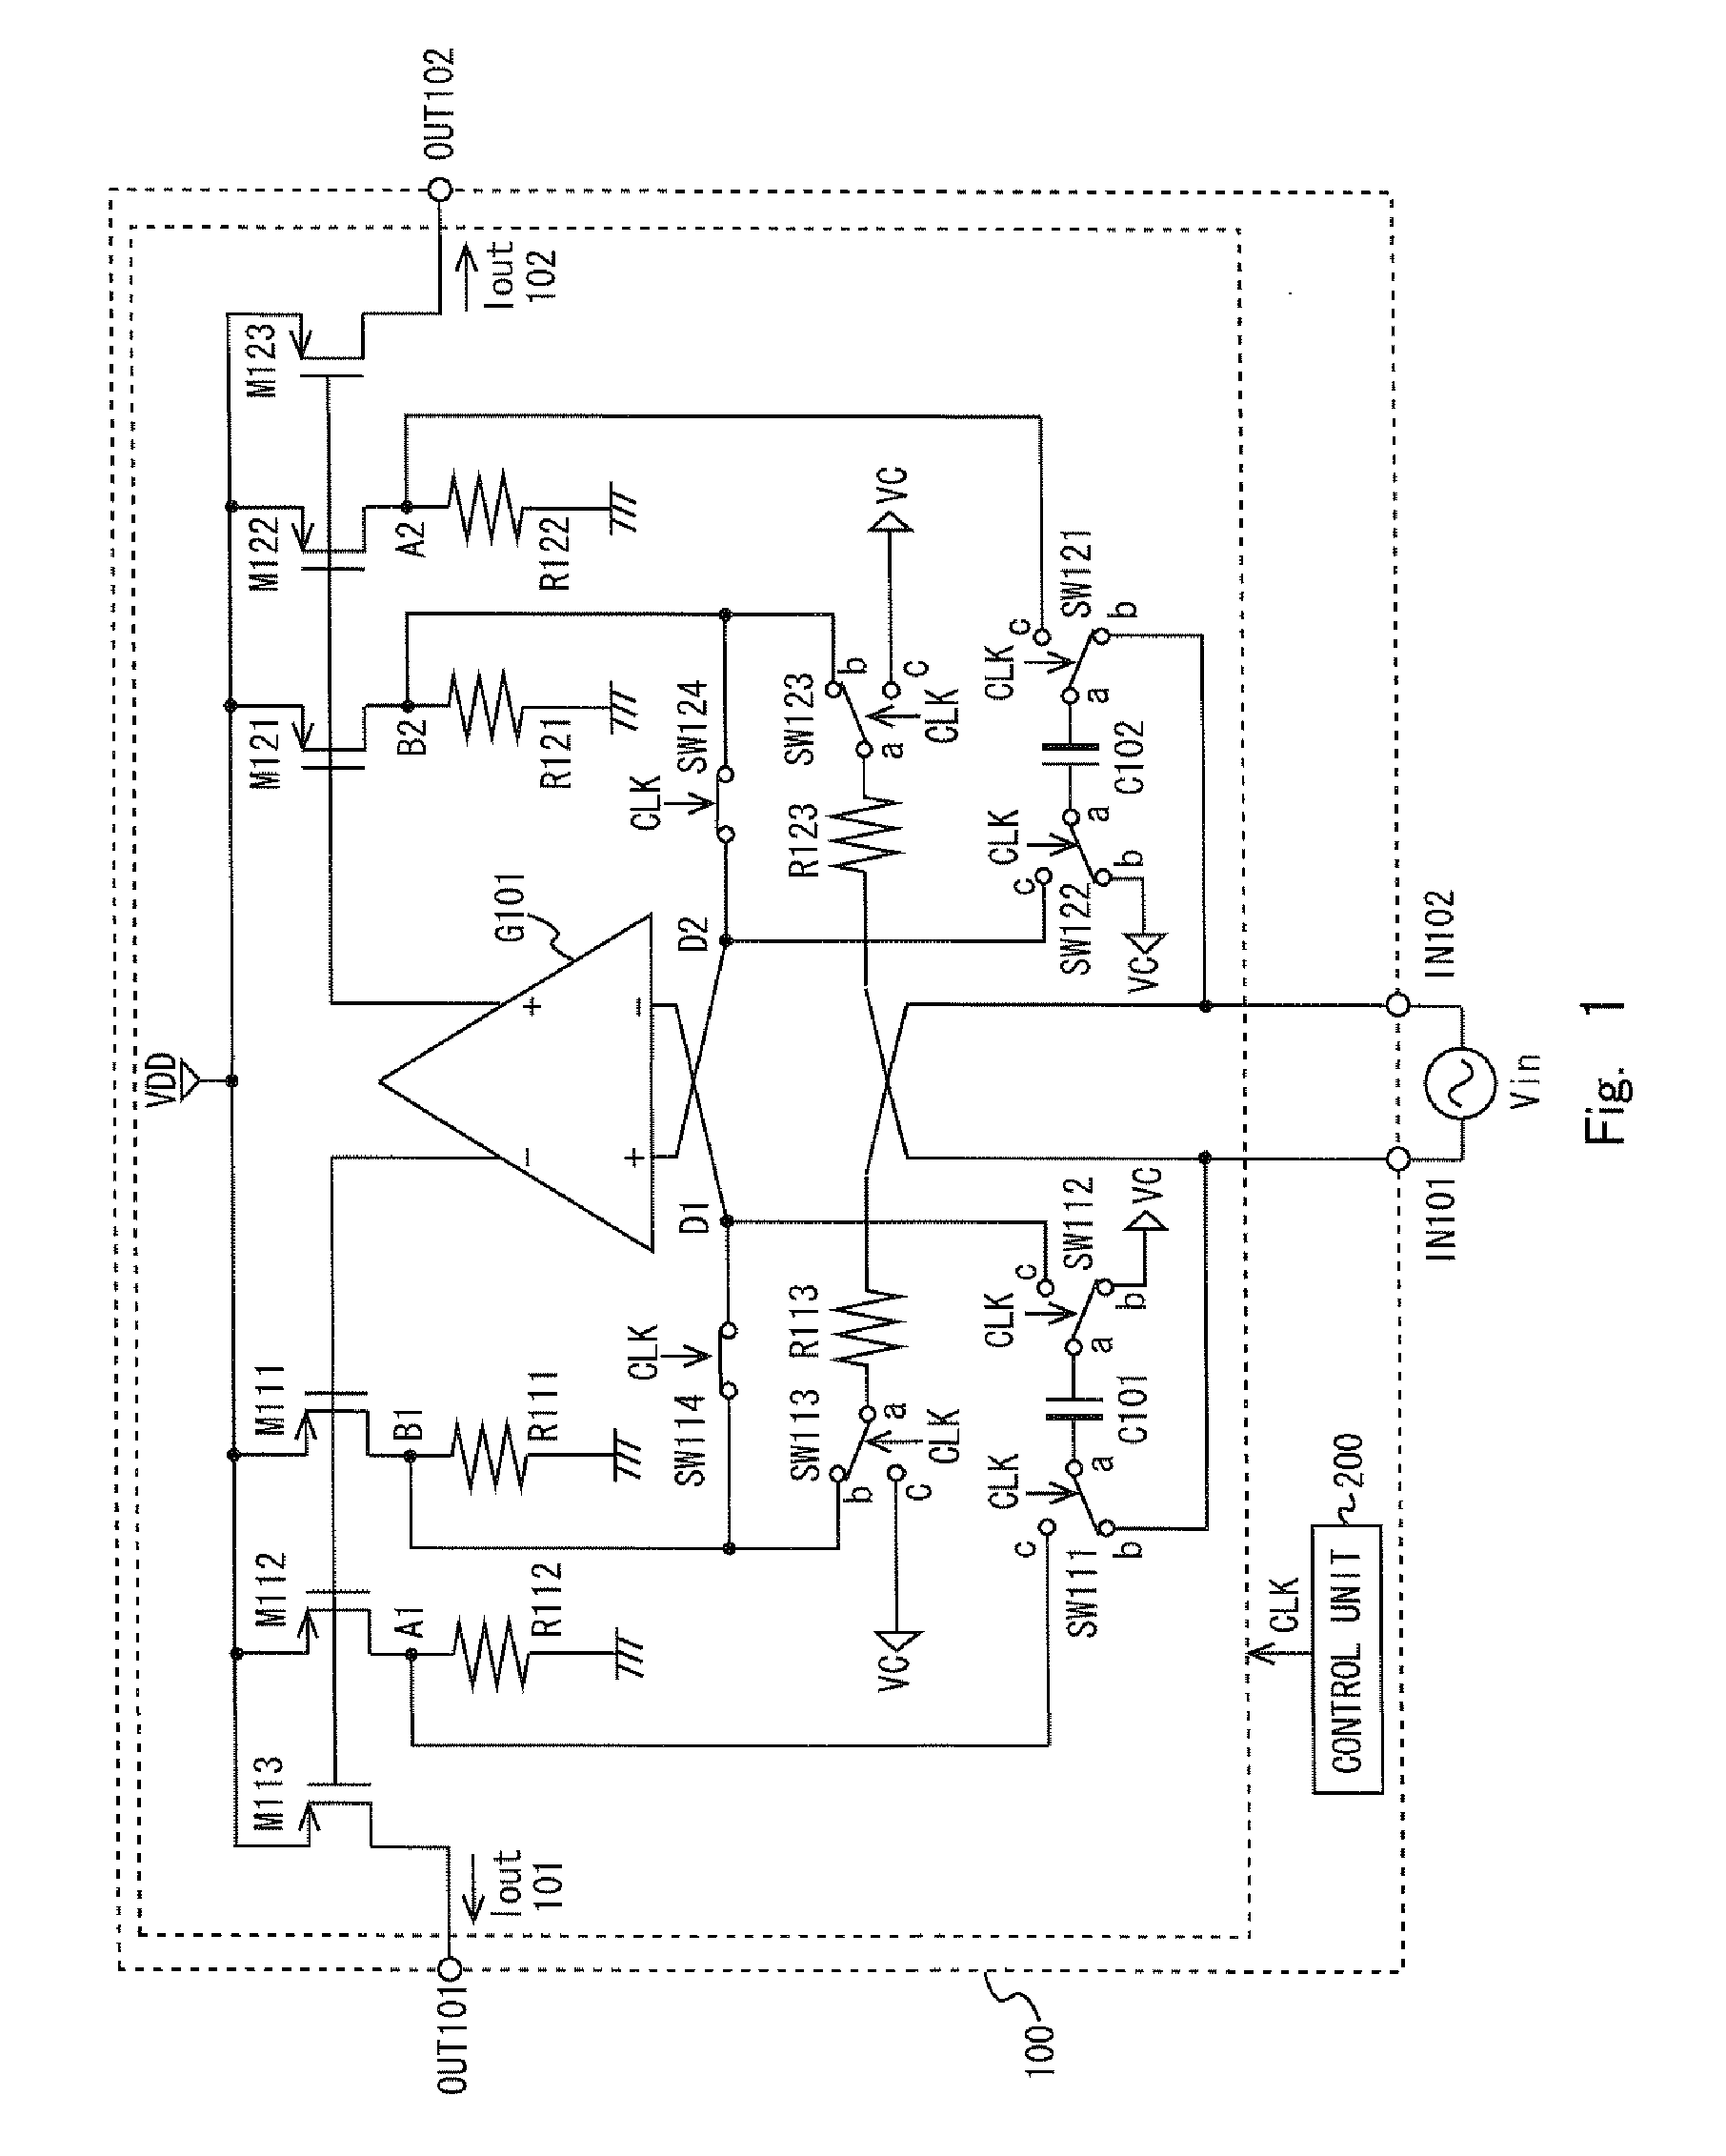 Voltage/current conversion circuit